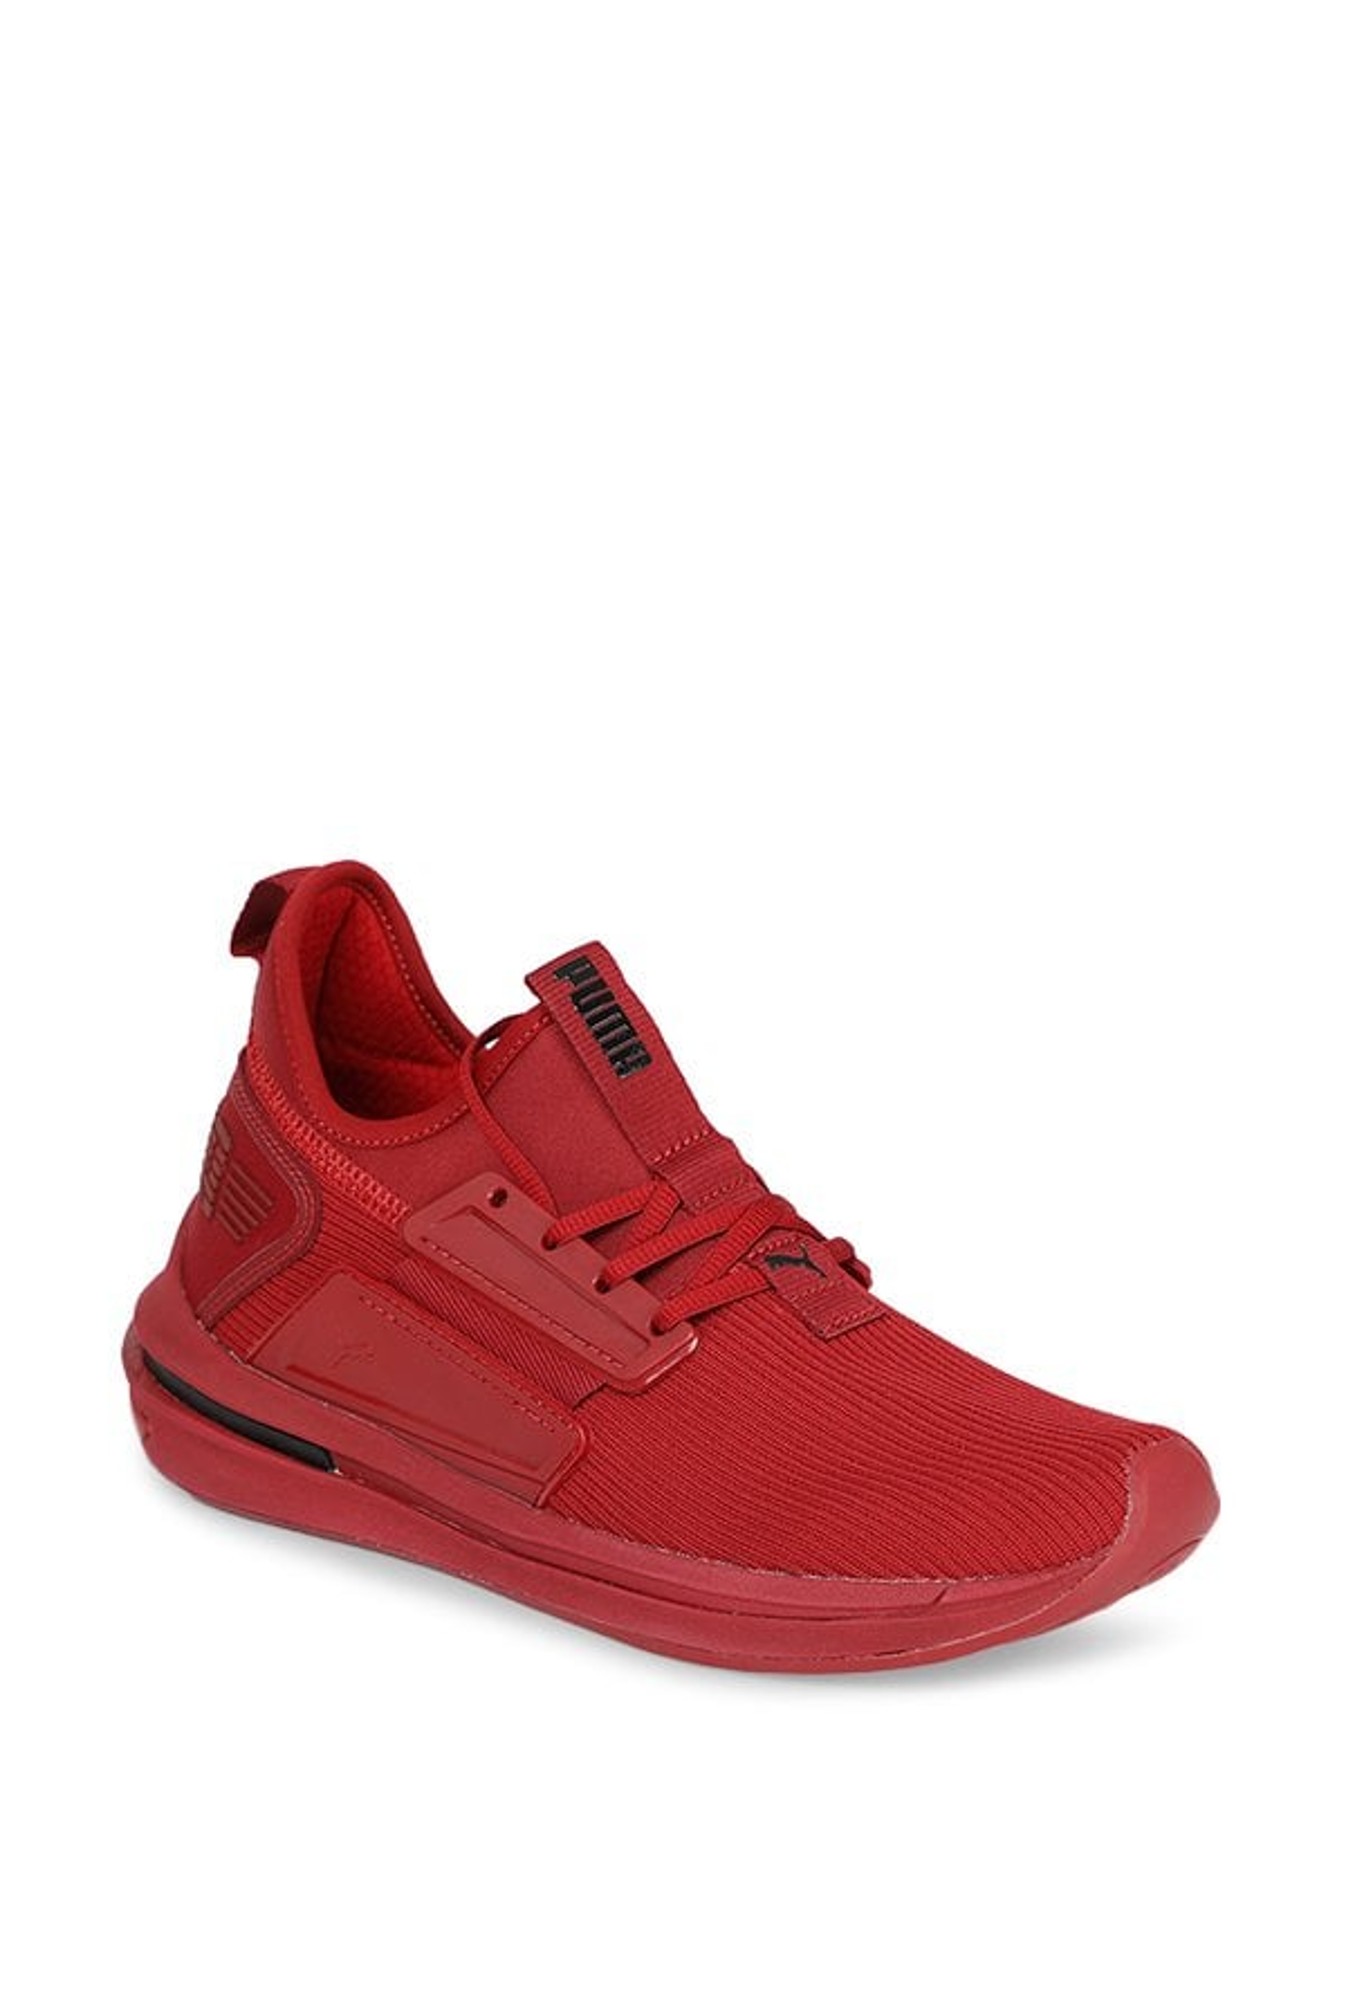 puma ignite red shoes